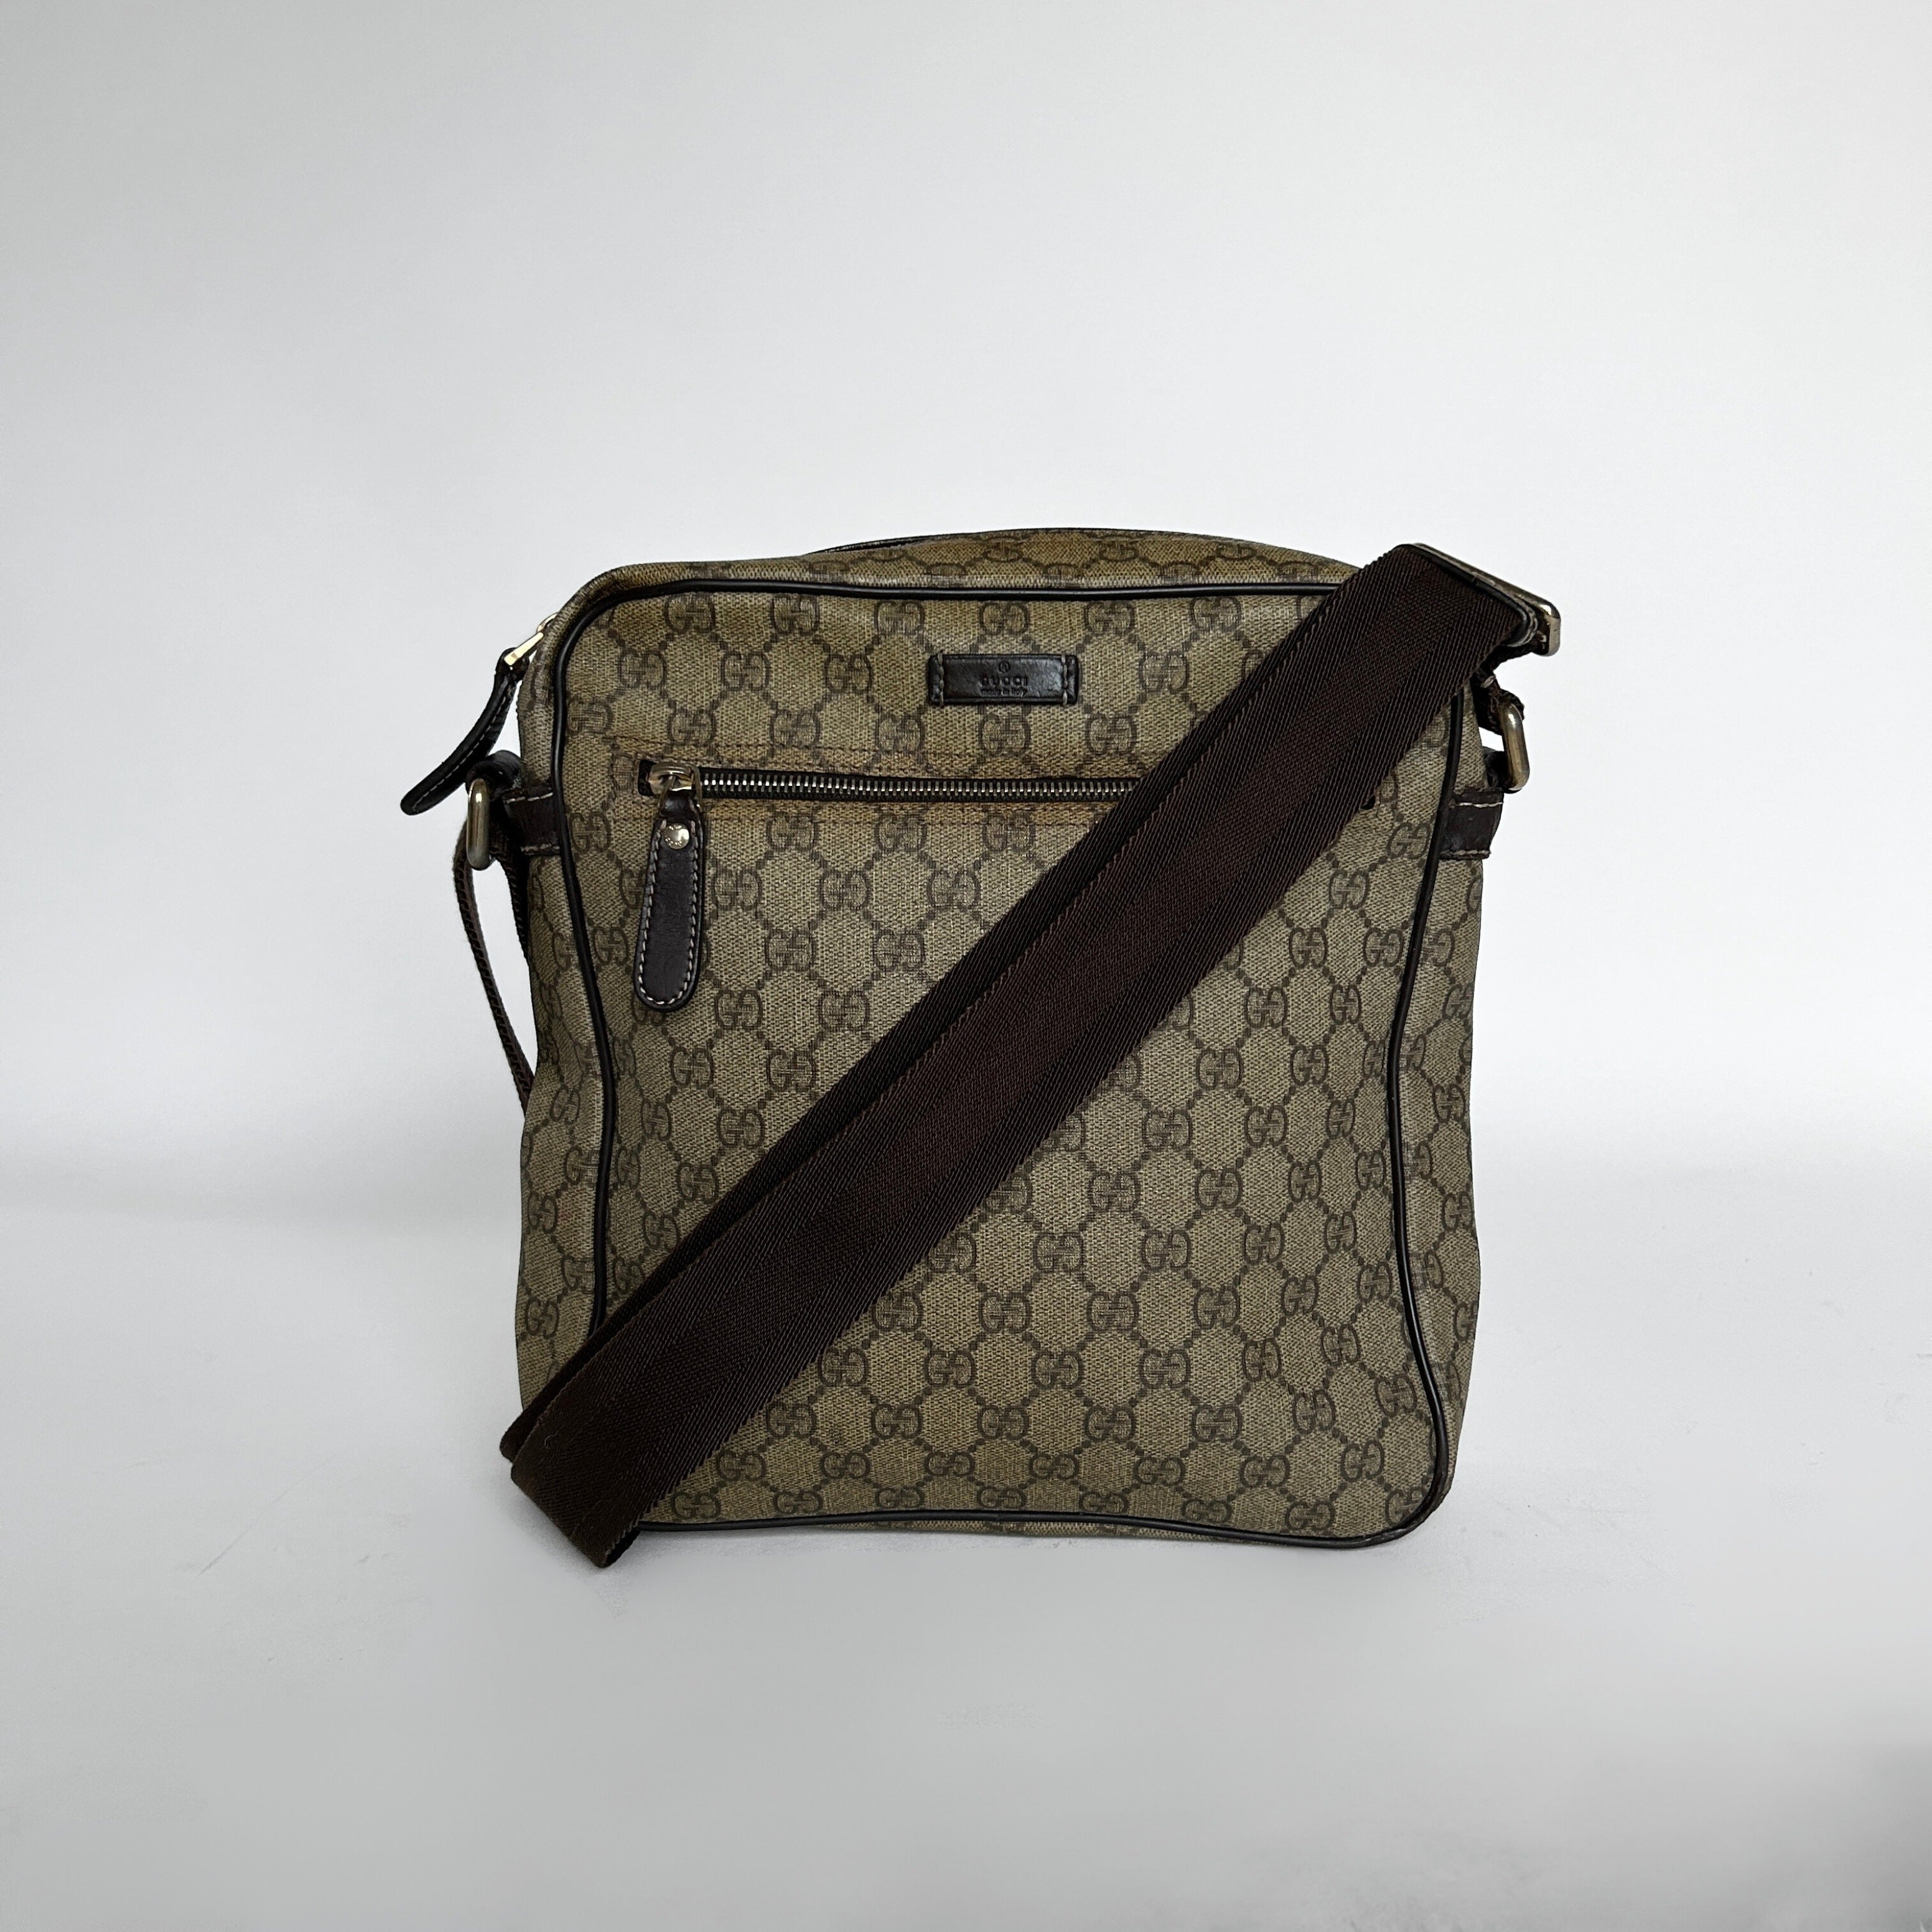 Gucci Print Messenger Bag in Black : Amazon.in: Fashion